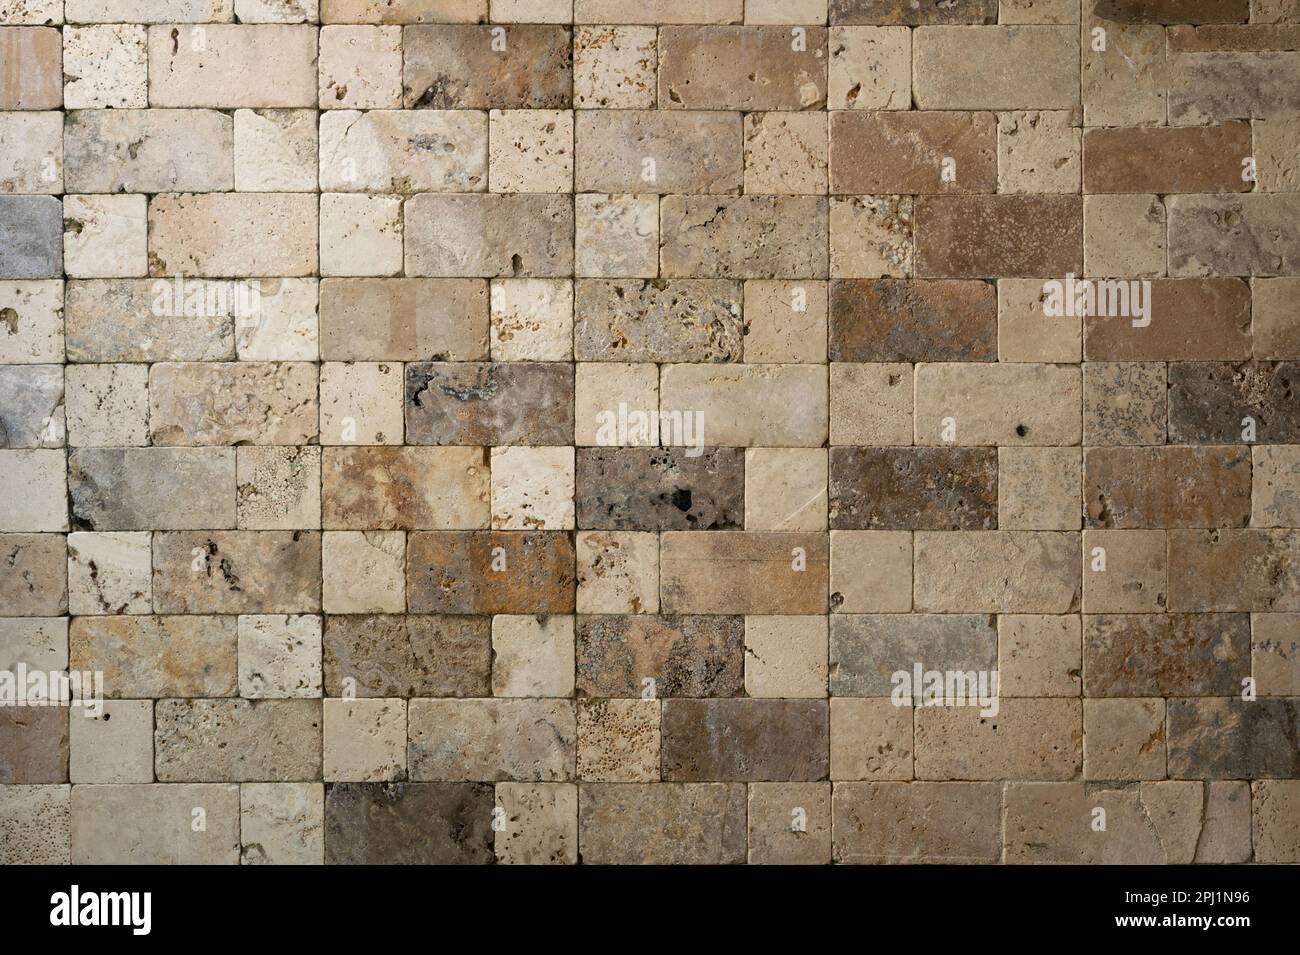 Brown square shape bricks texture pattern close up view Stock Photo